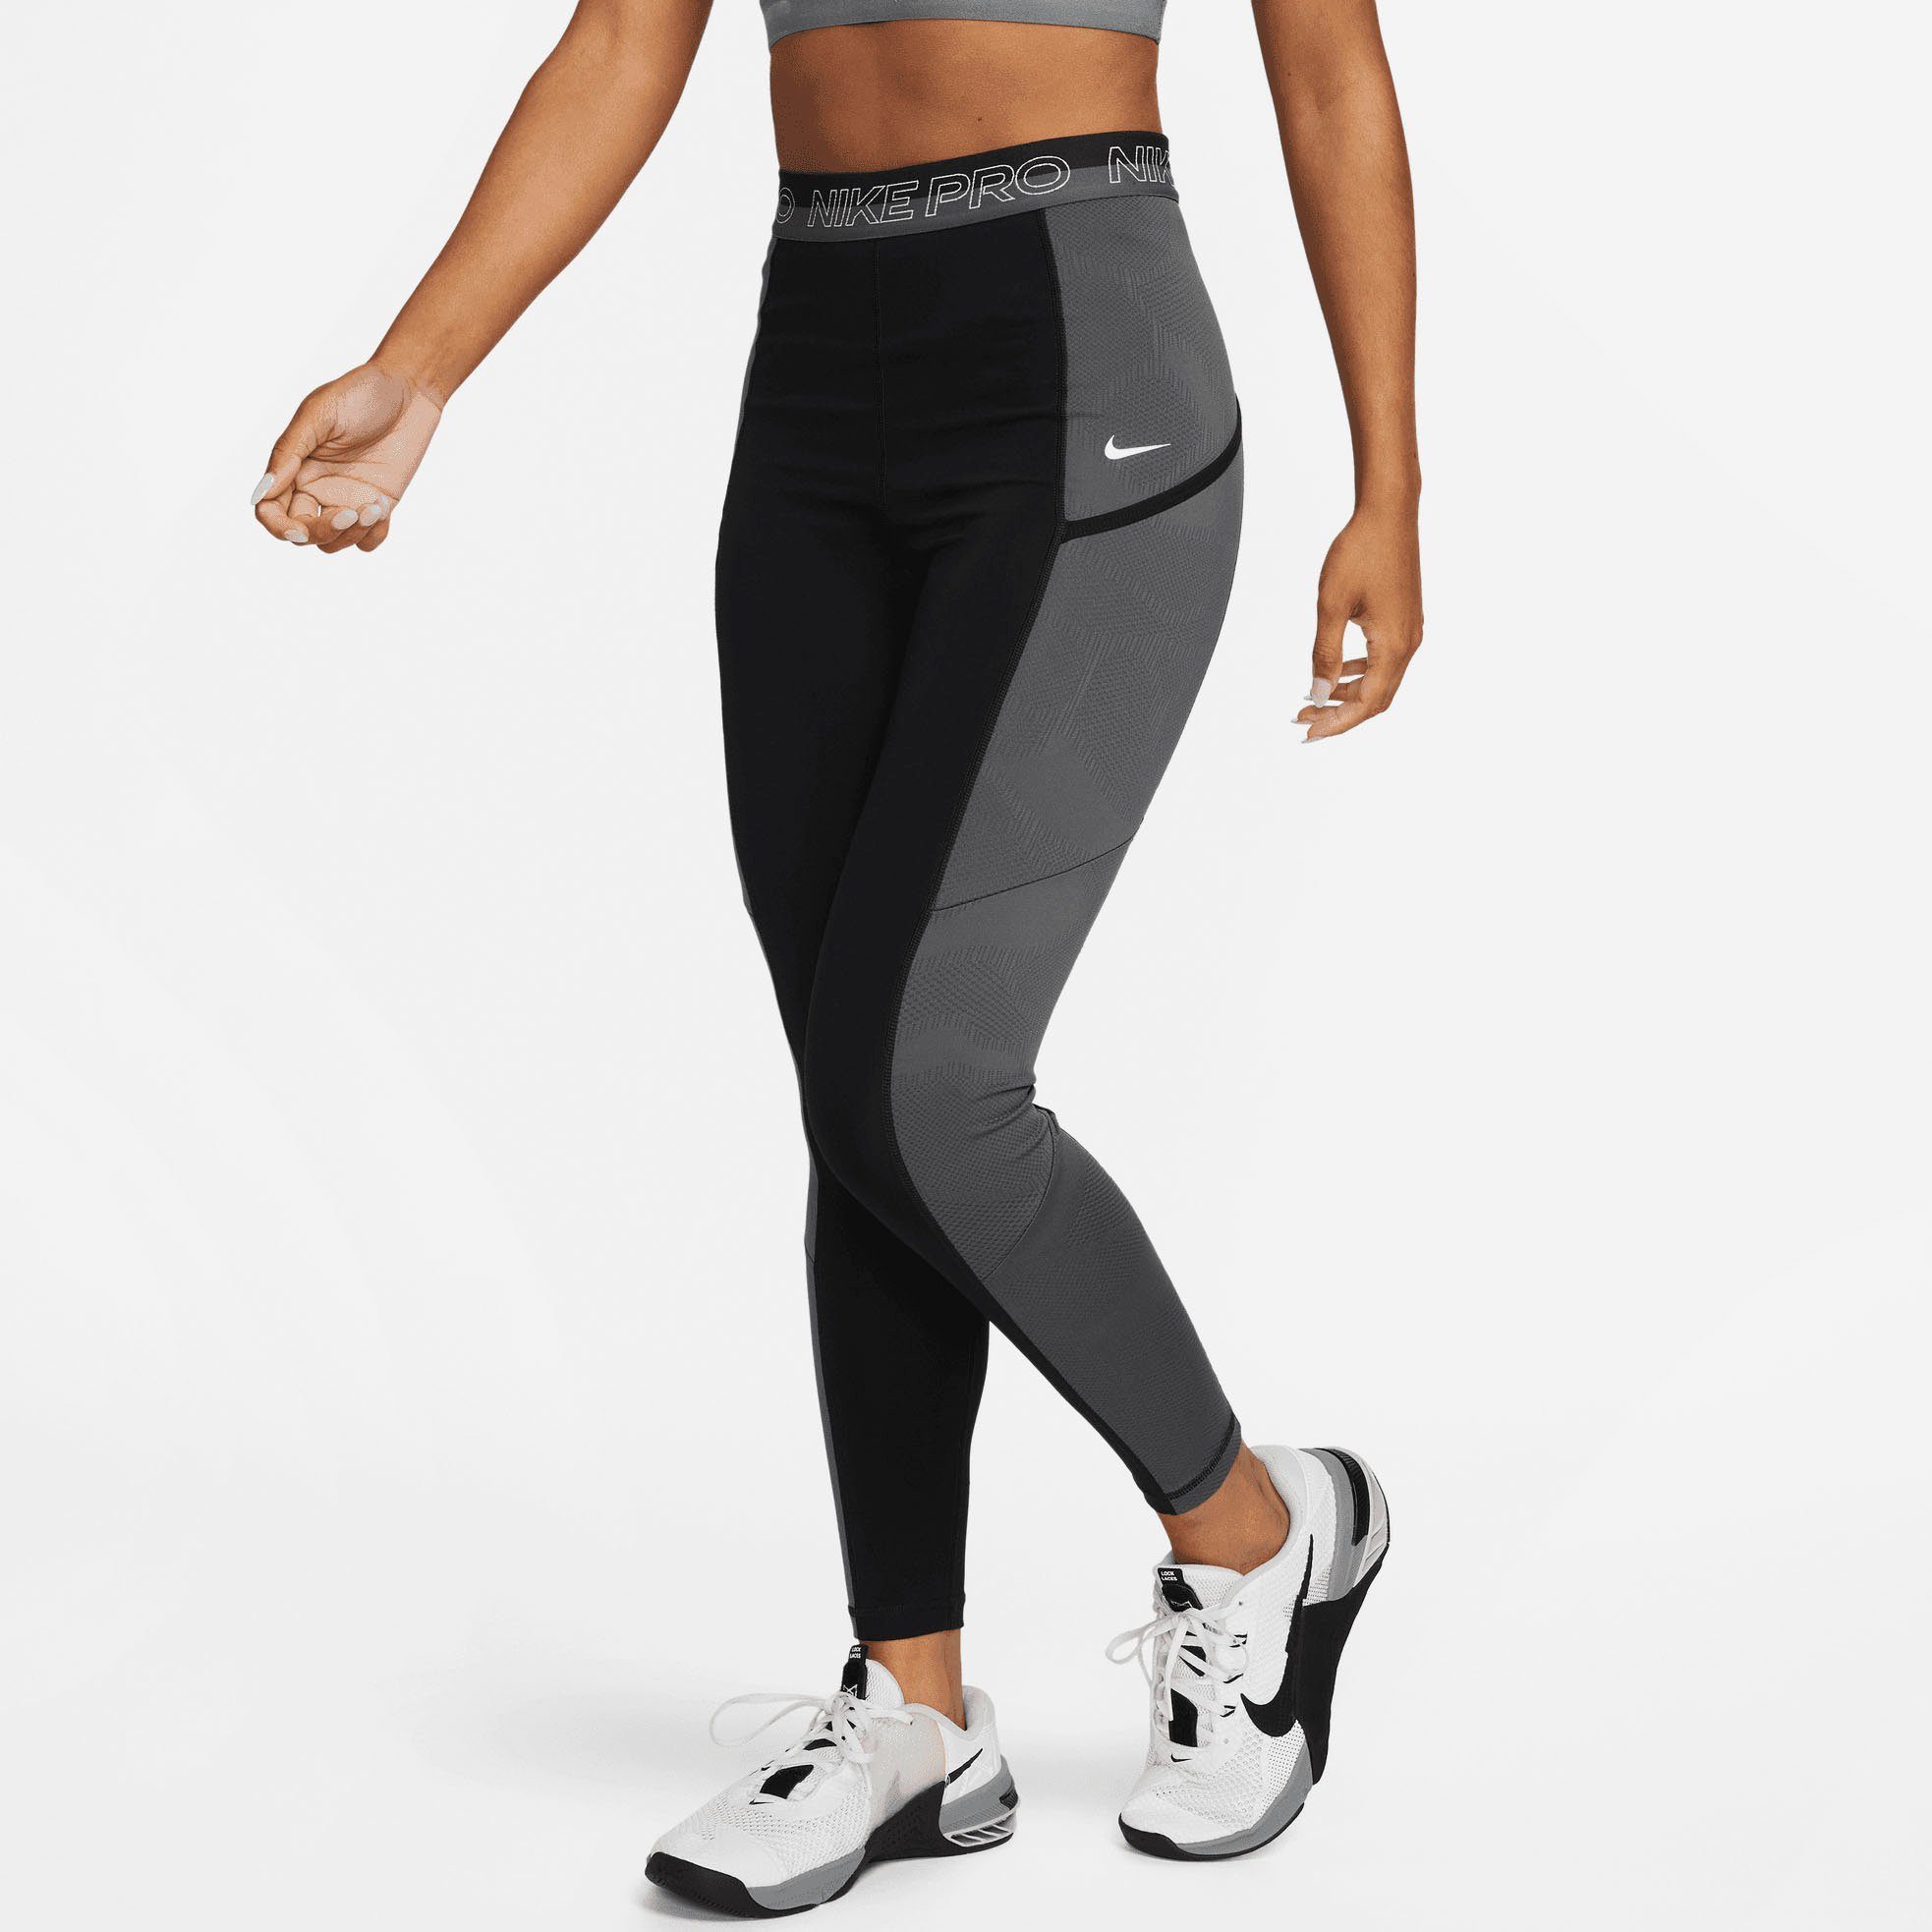 Nike Damen Sporthosen online kaufen | OTTO